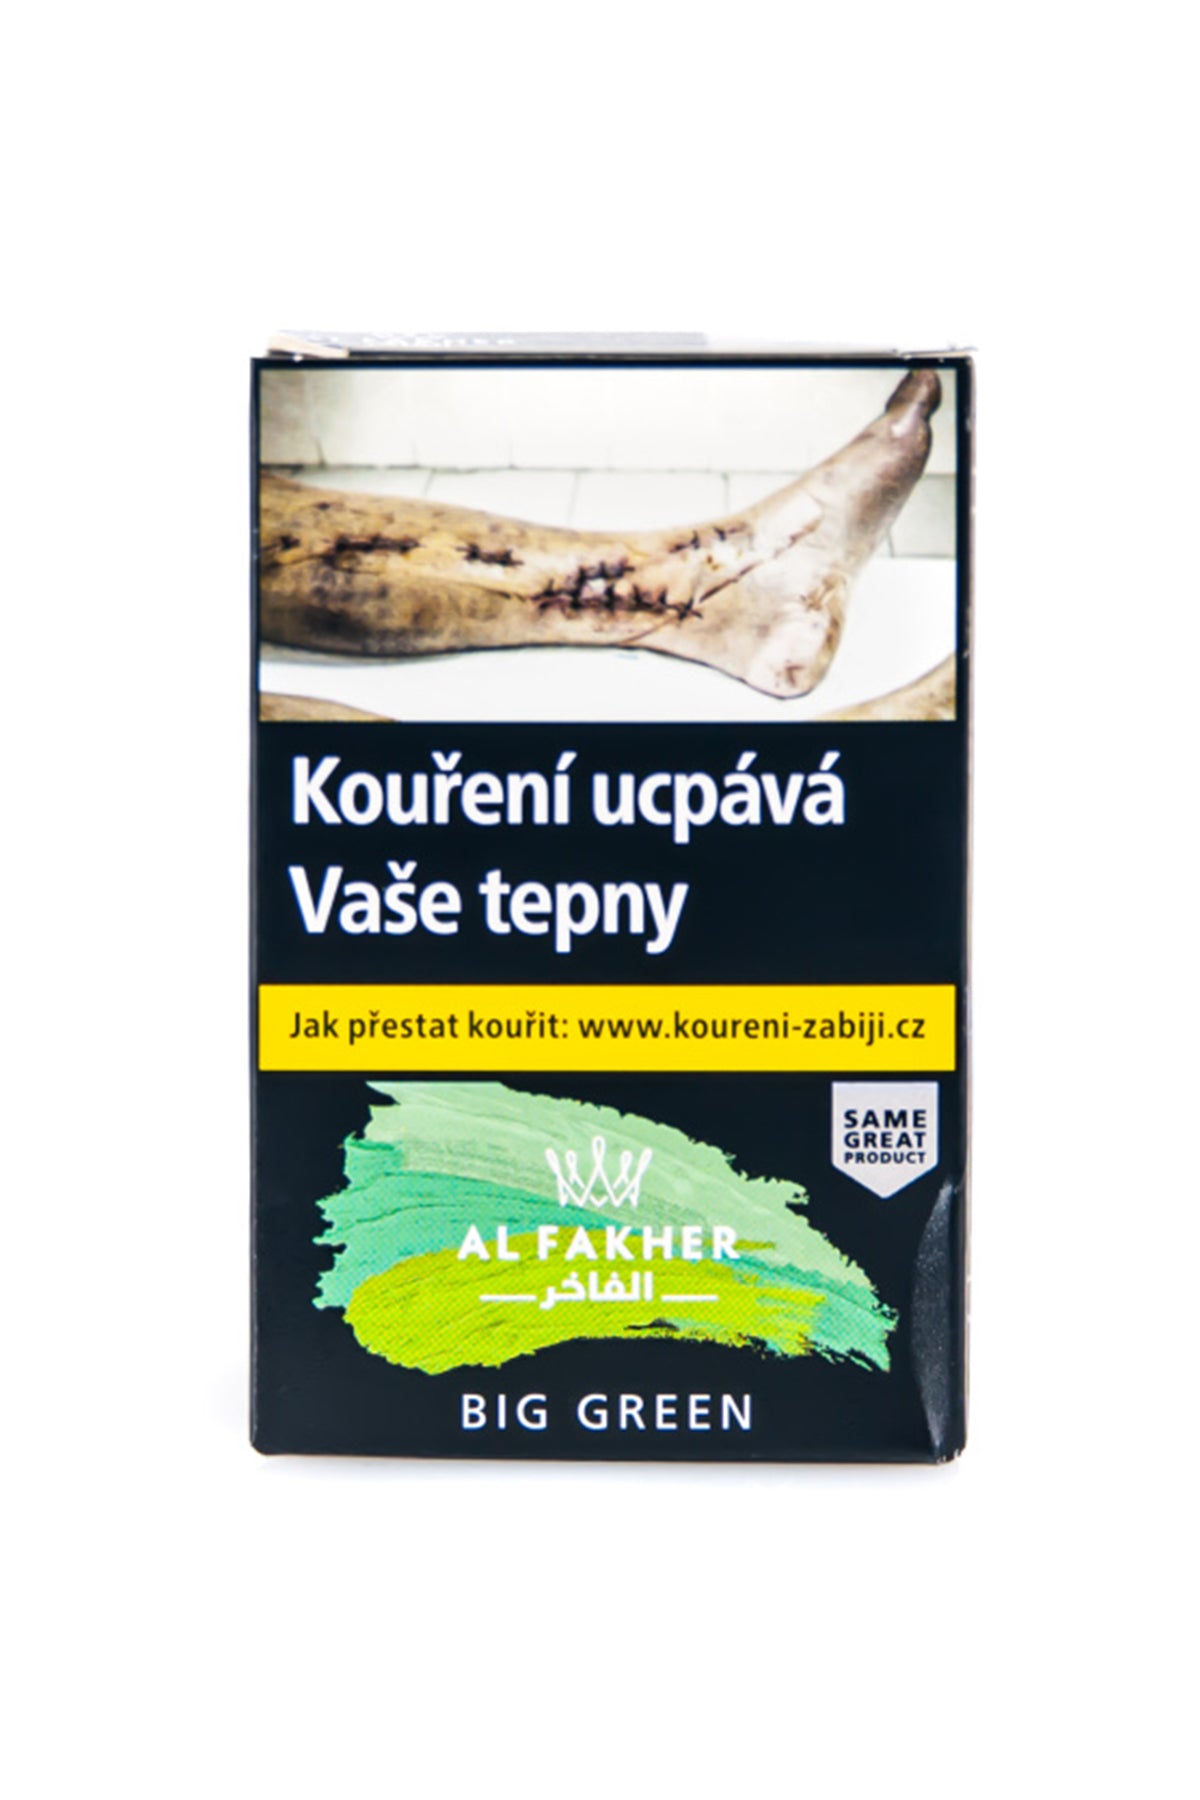 Tabák - Al Fakher 50g - Big Green